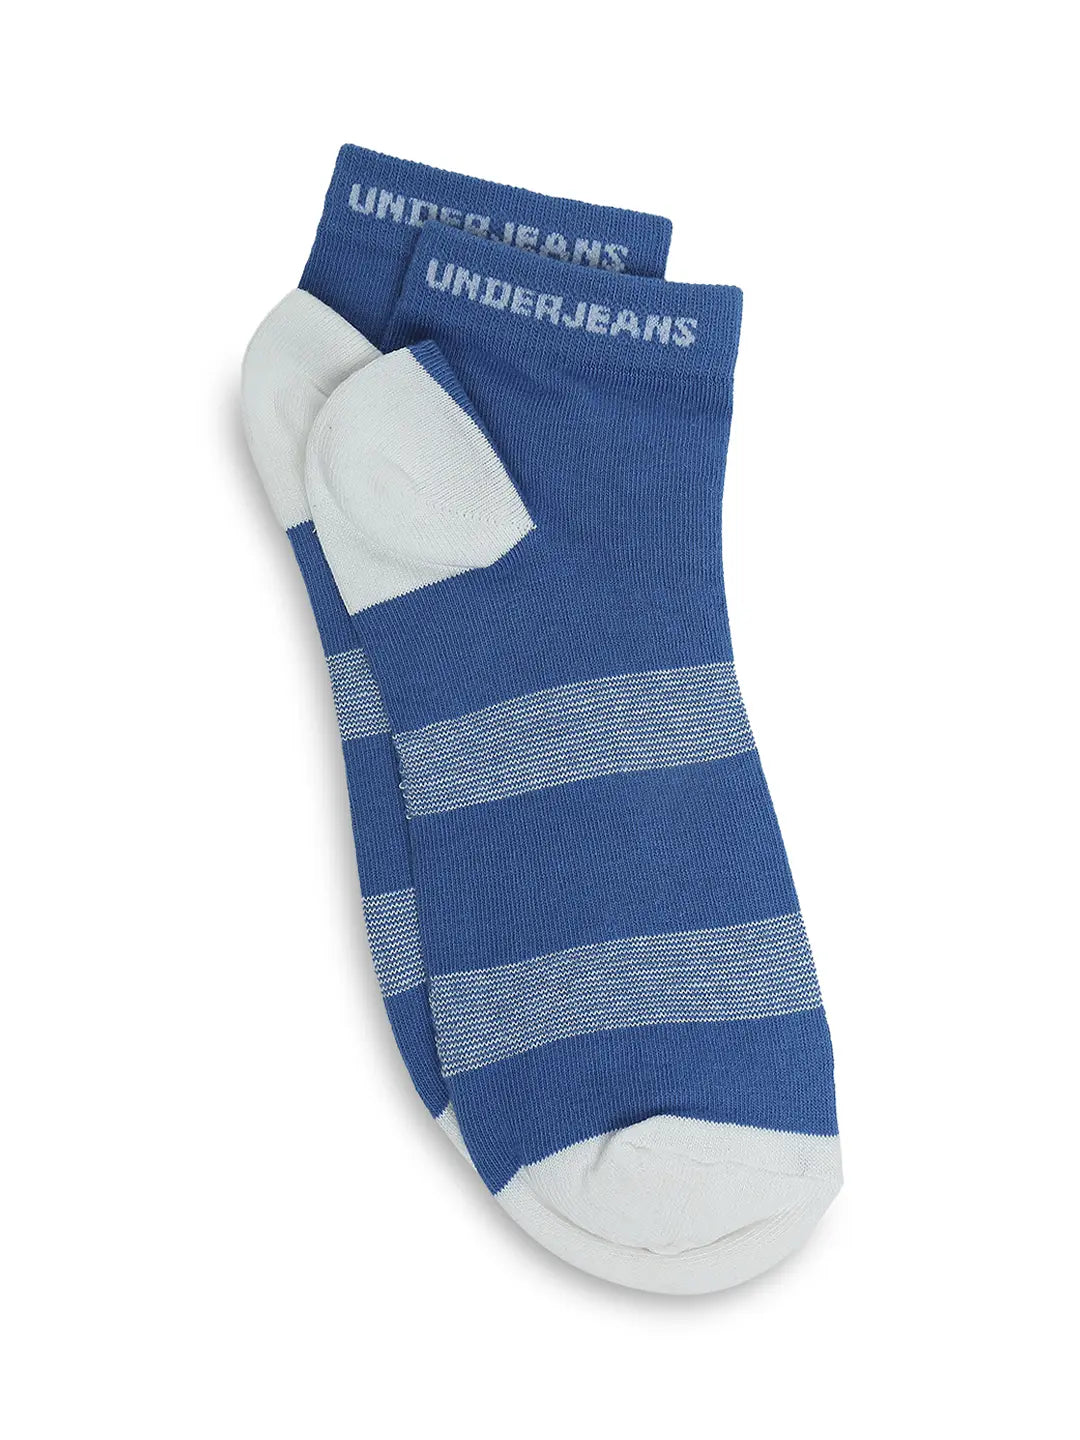 Men Premium Black & Royal Blue Ankle Length Socks - Pack Of 2- Underjeans by Spykar